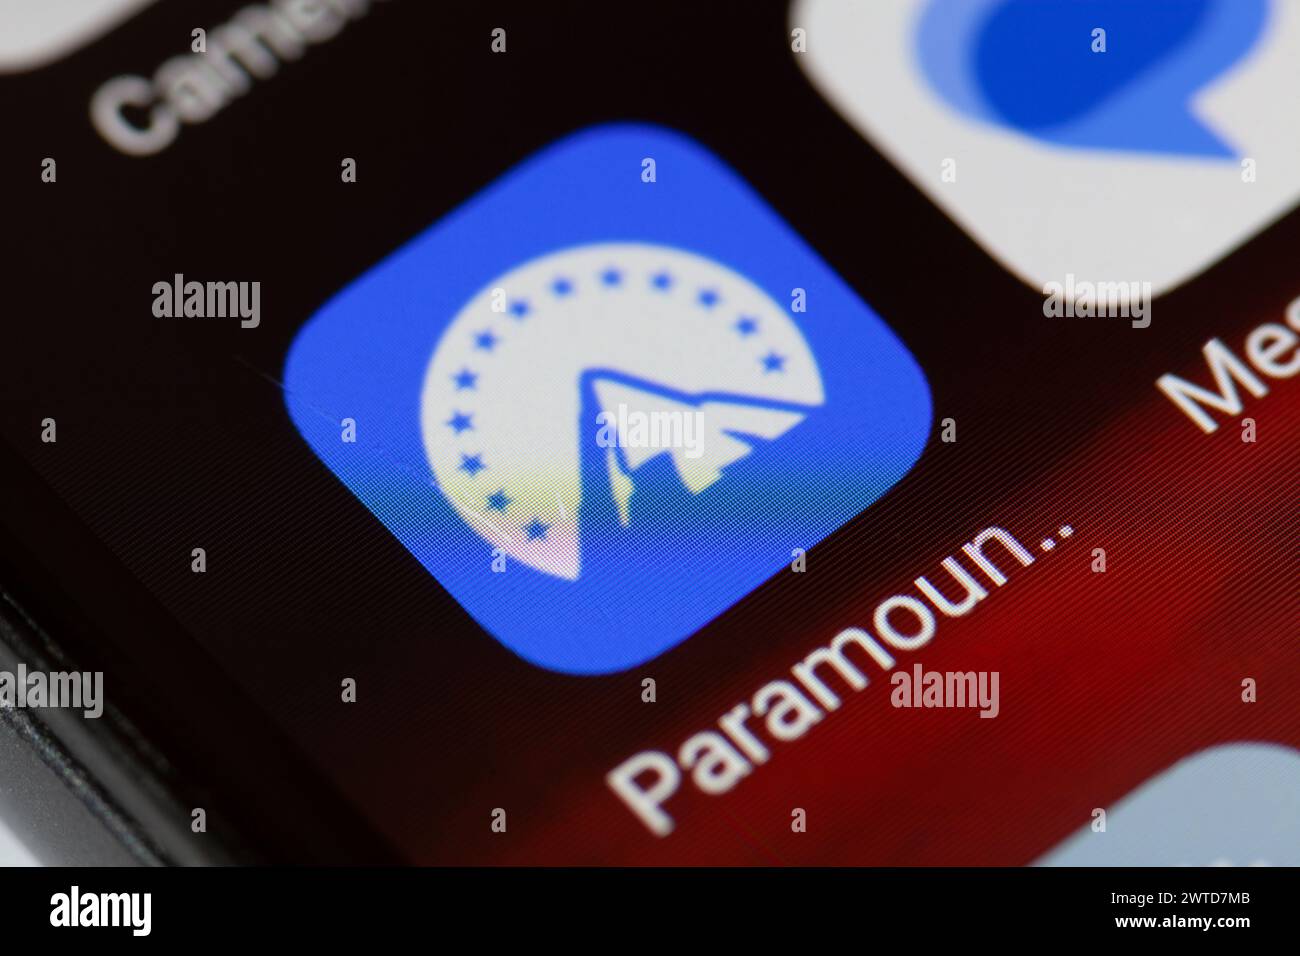 Paramount+ app icon on mobile phone Stock Photo